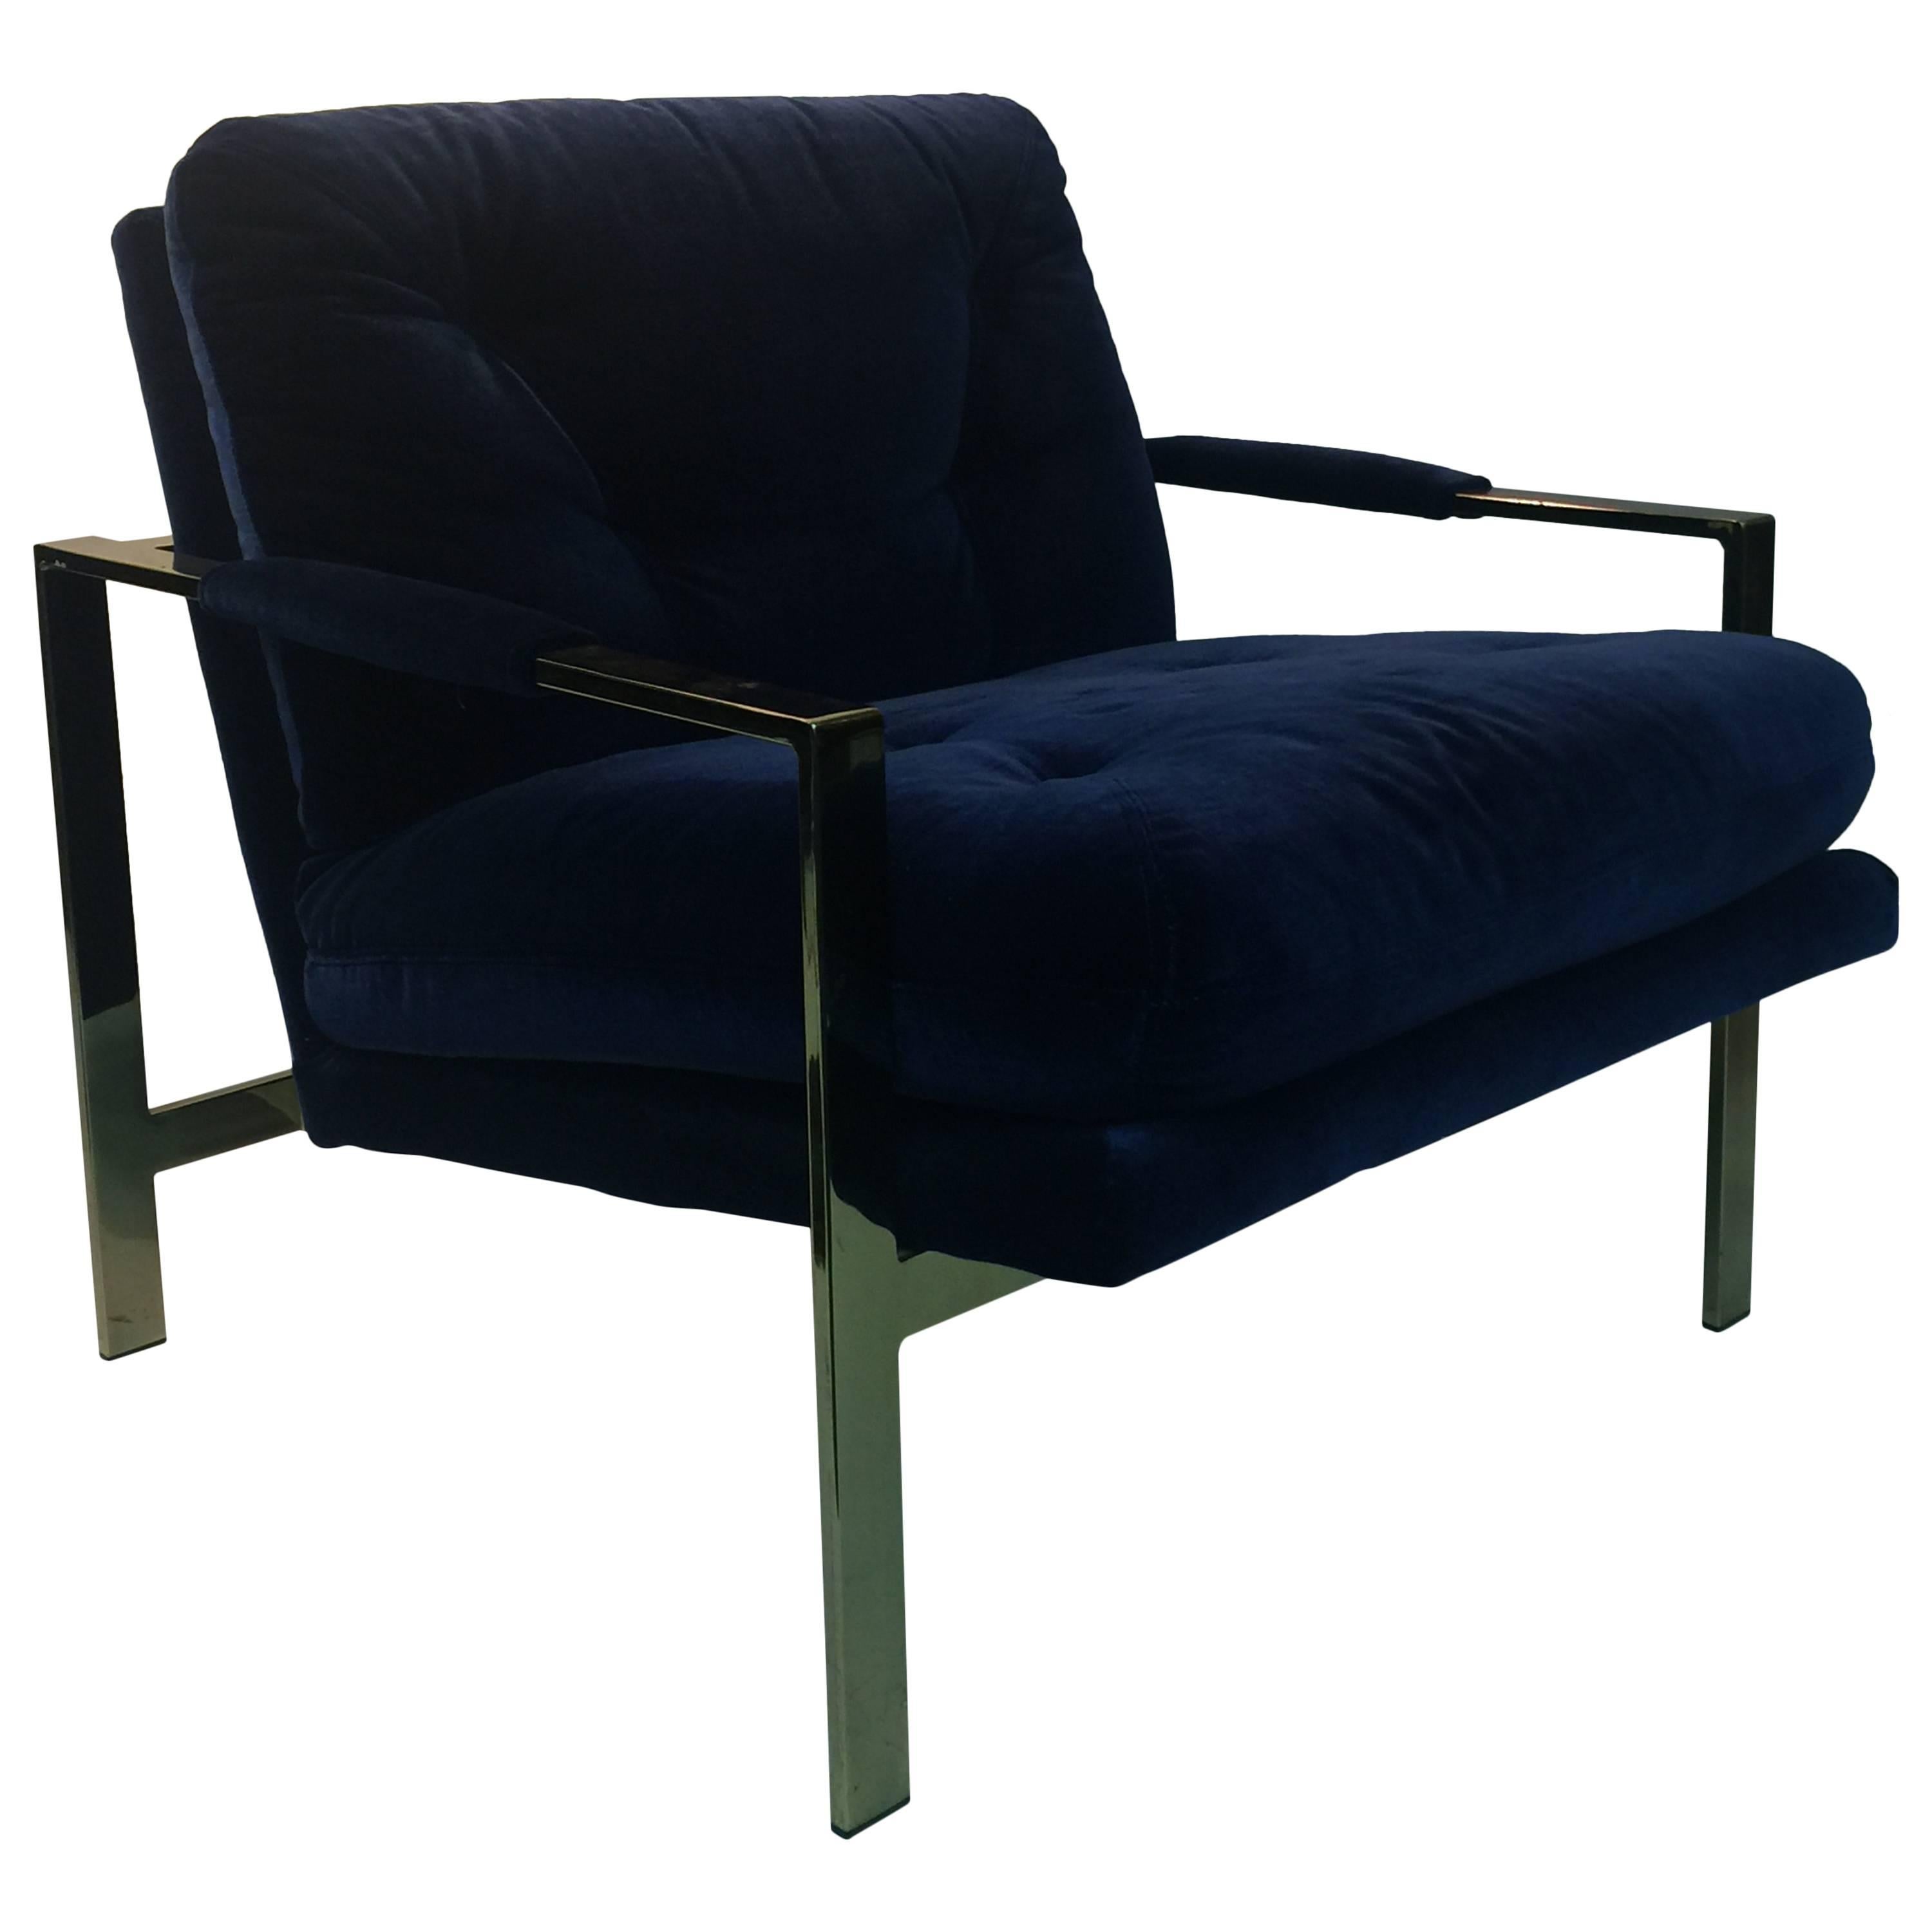 Luxurious Milo Baughman Lounge Chair Upholstered in Lush Blue Velvet For Sale